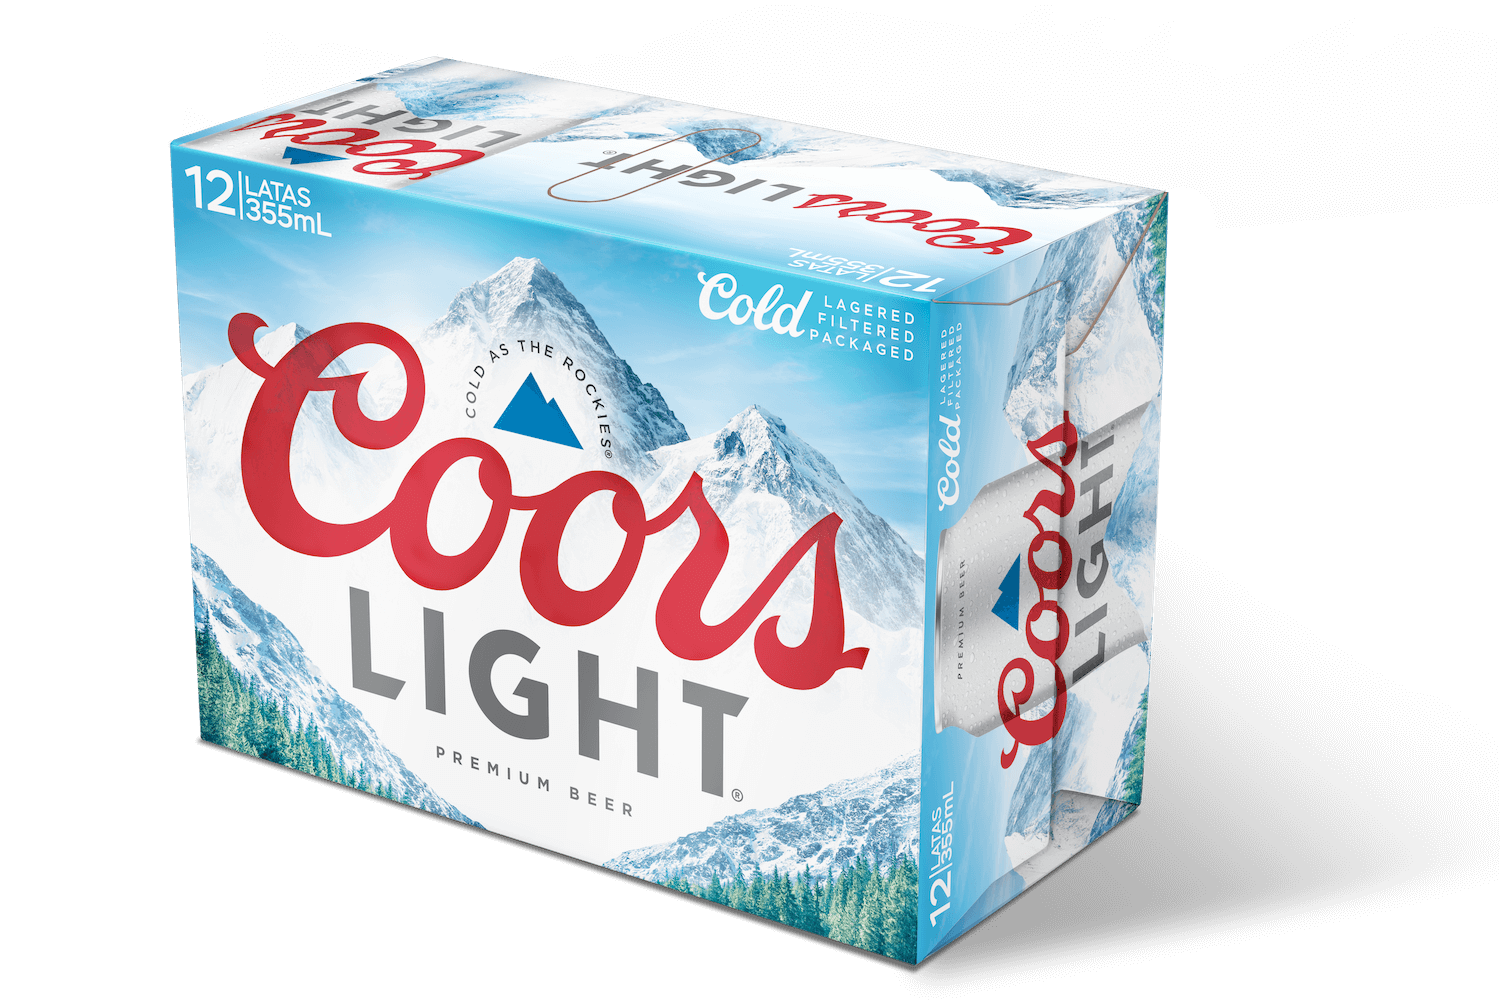 Coors Light 12 latas